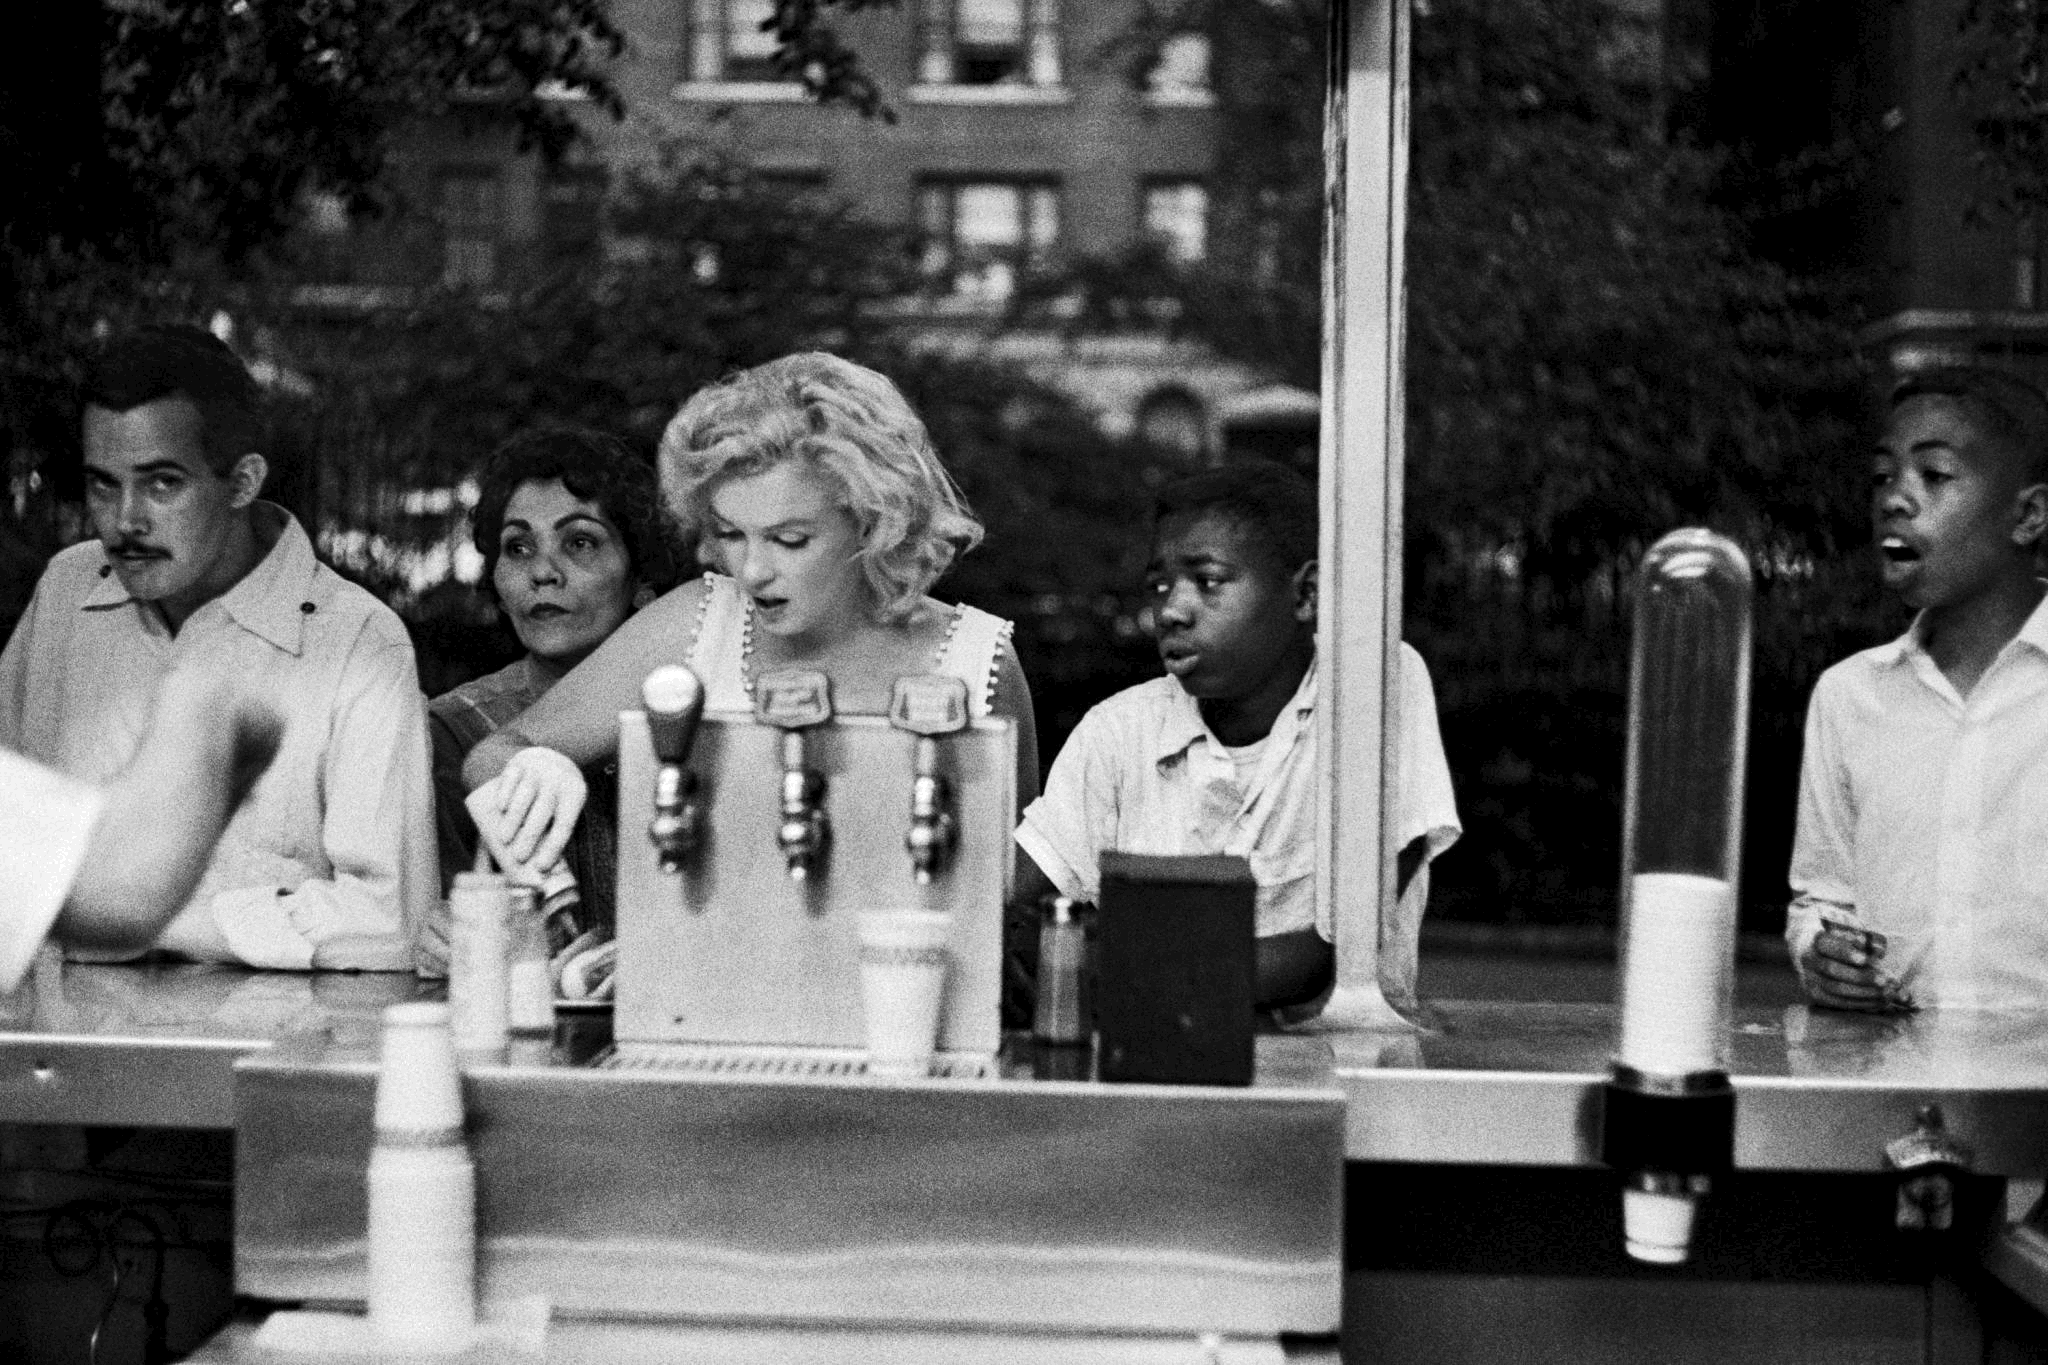 Marilyn Monroe preparing a hot dog at a counter in New York, NY (1957)